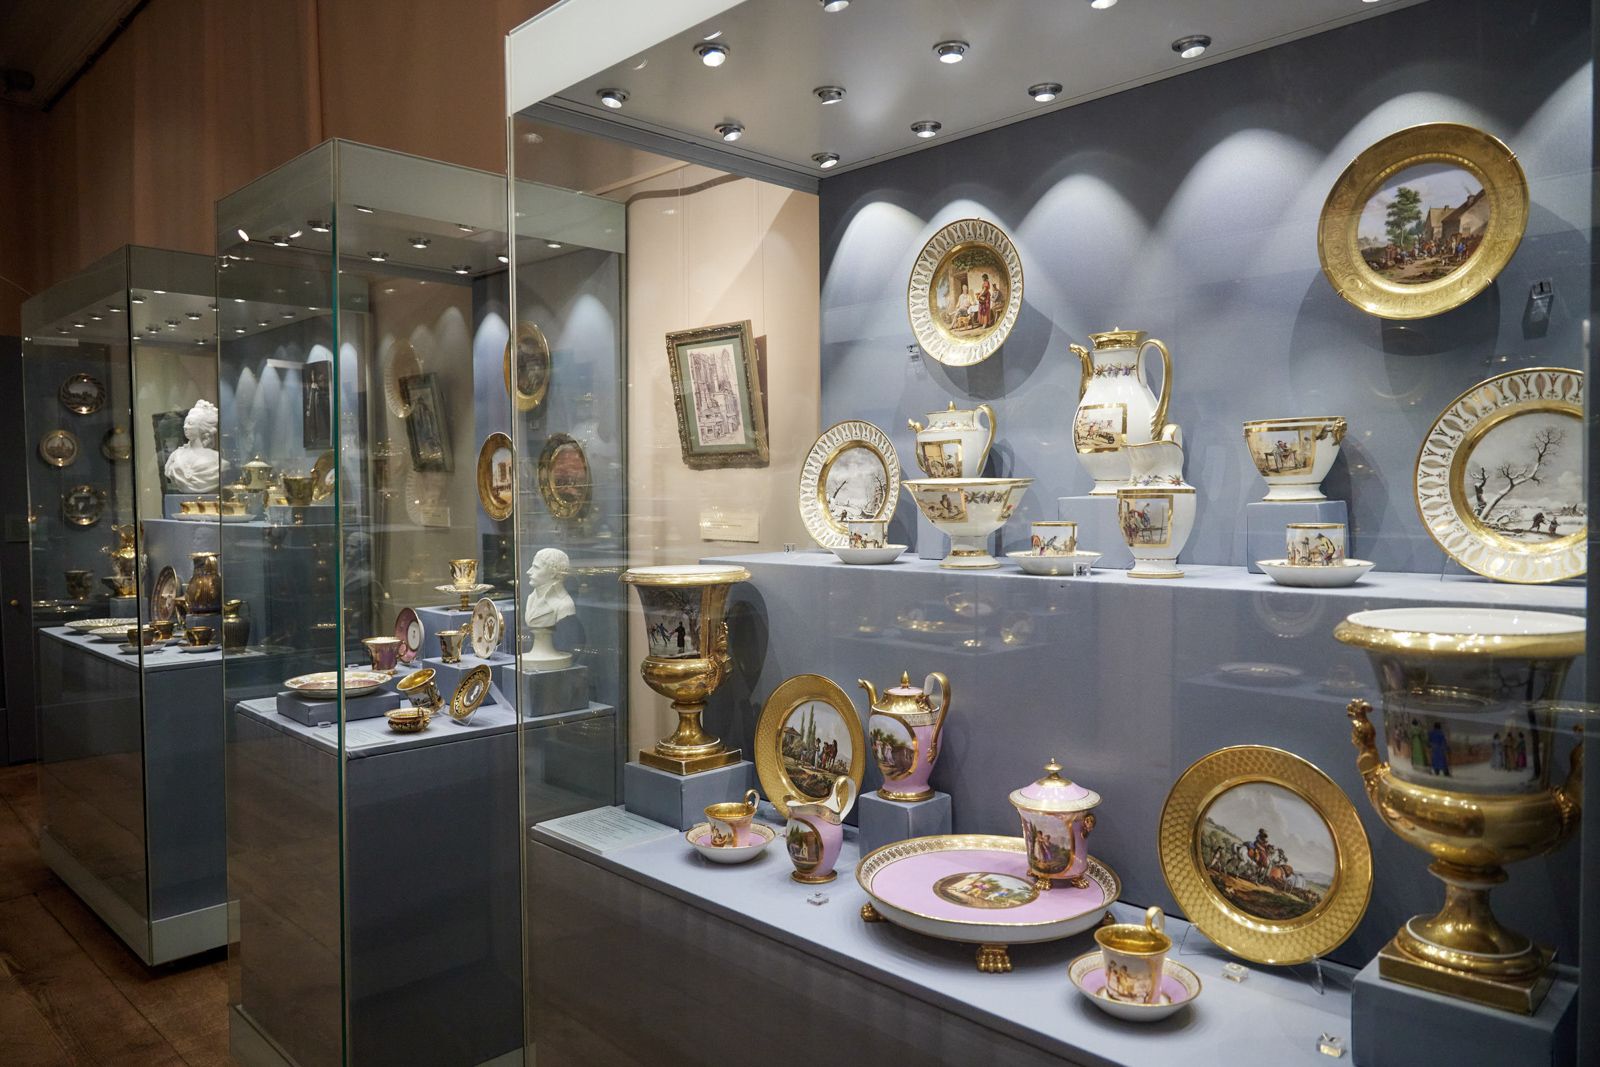 Выставка французского фарфора XVIII–XIX веков открыта в Кусково, фото